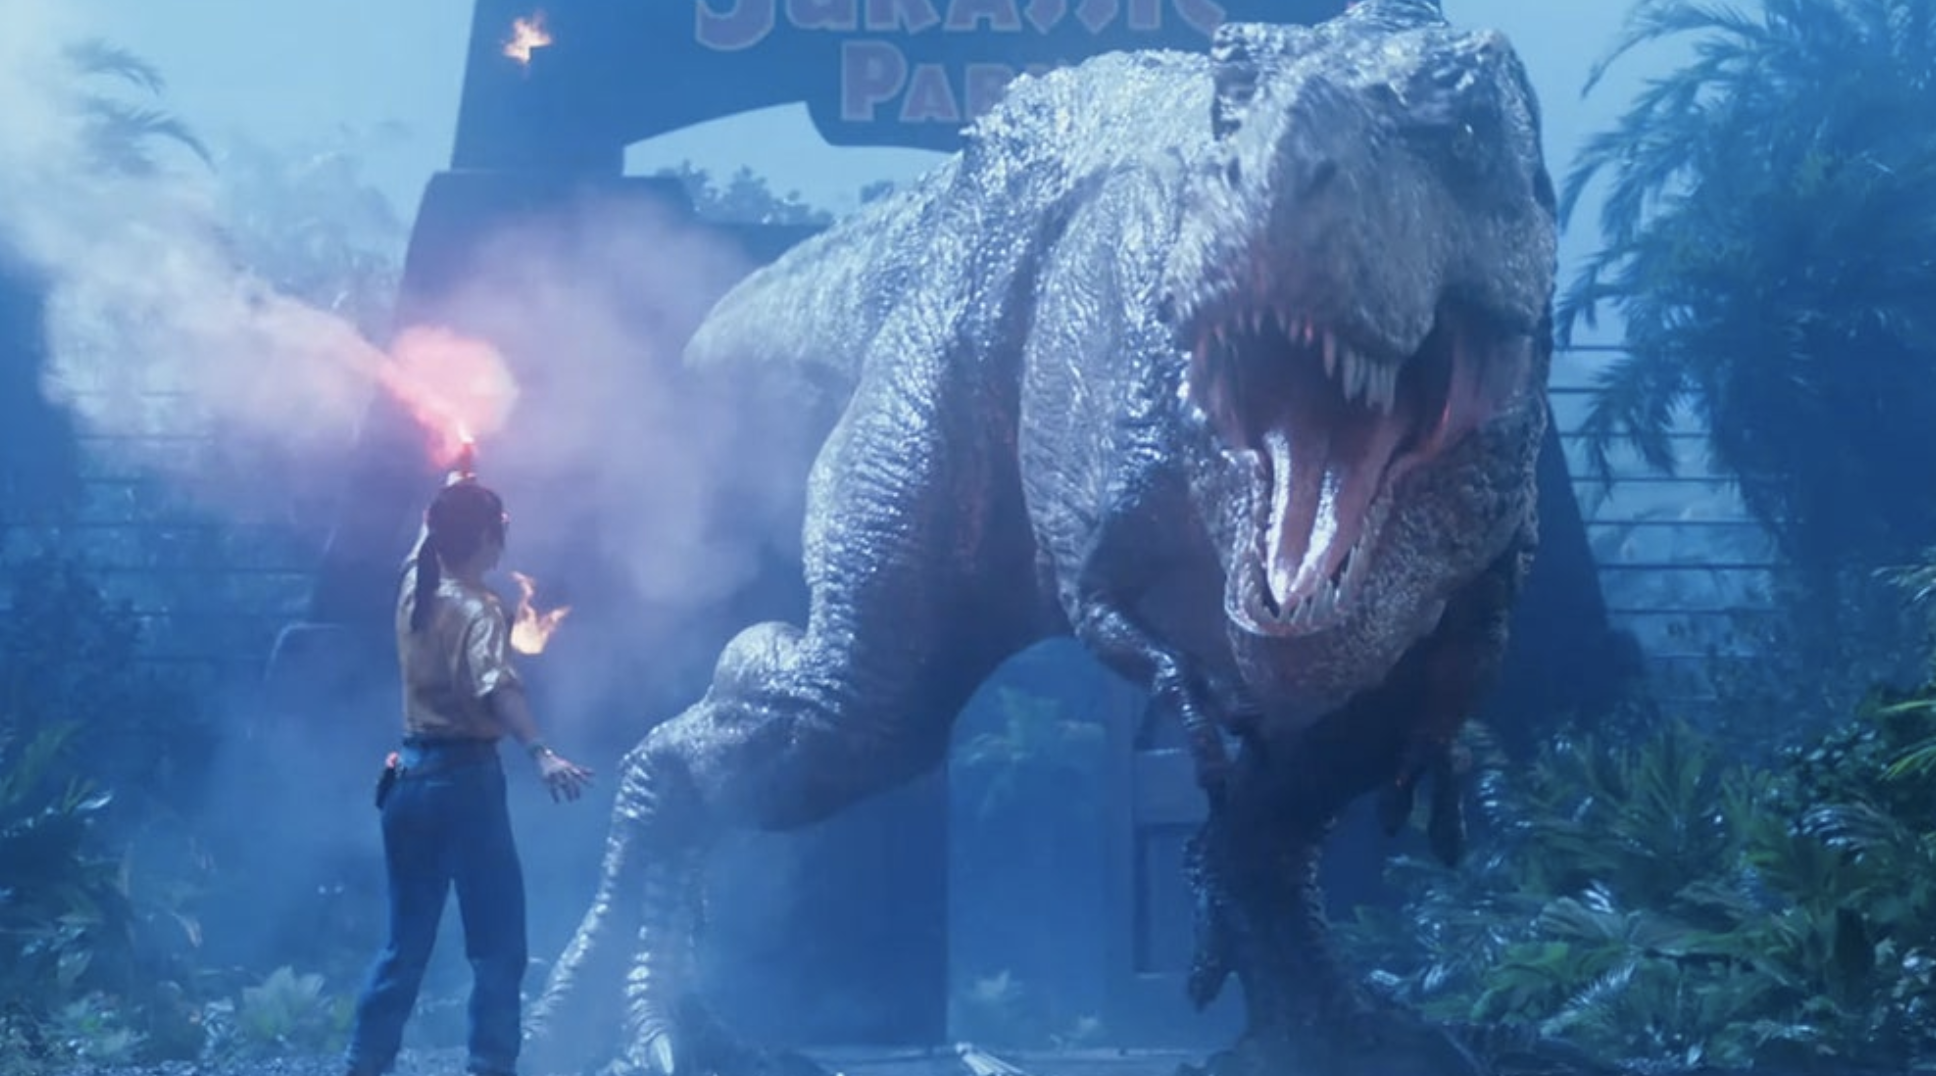 Jurassic Park: Survival screenshot game